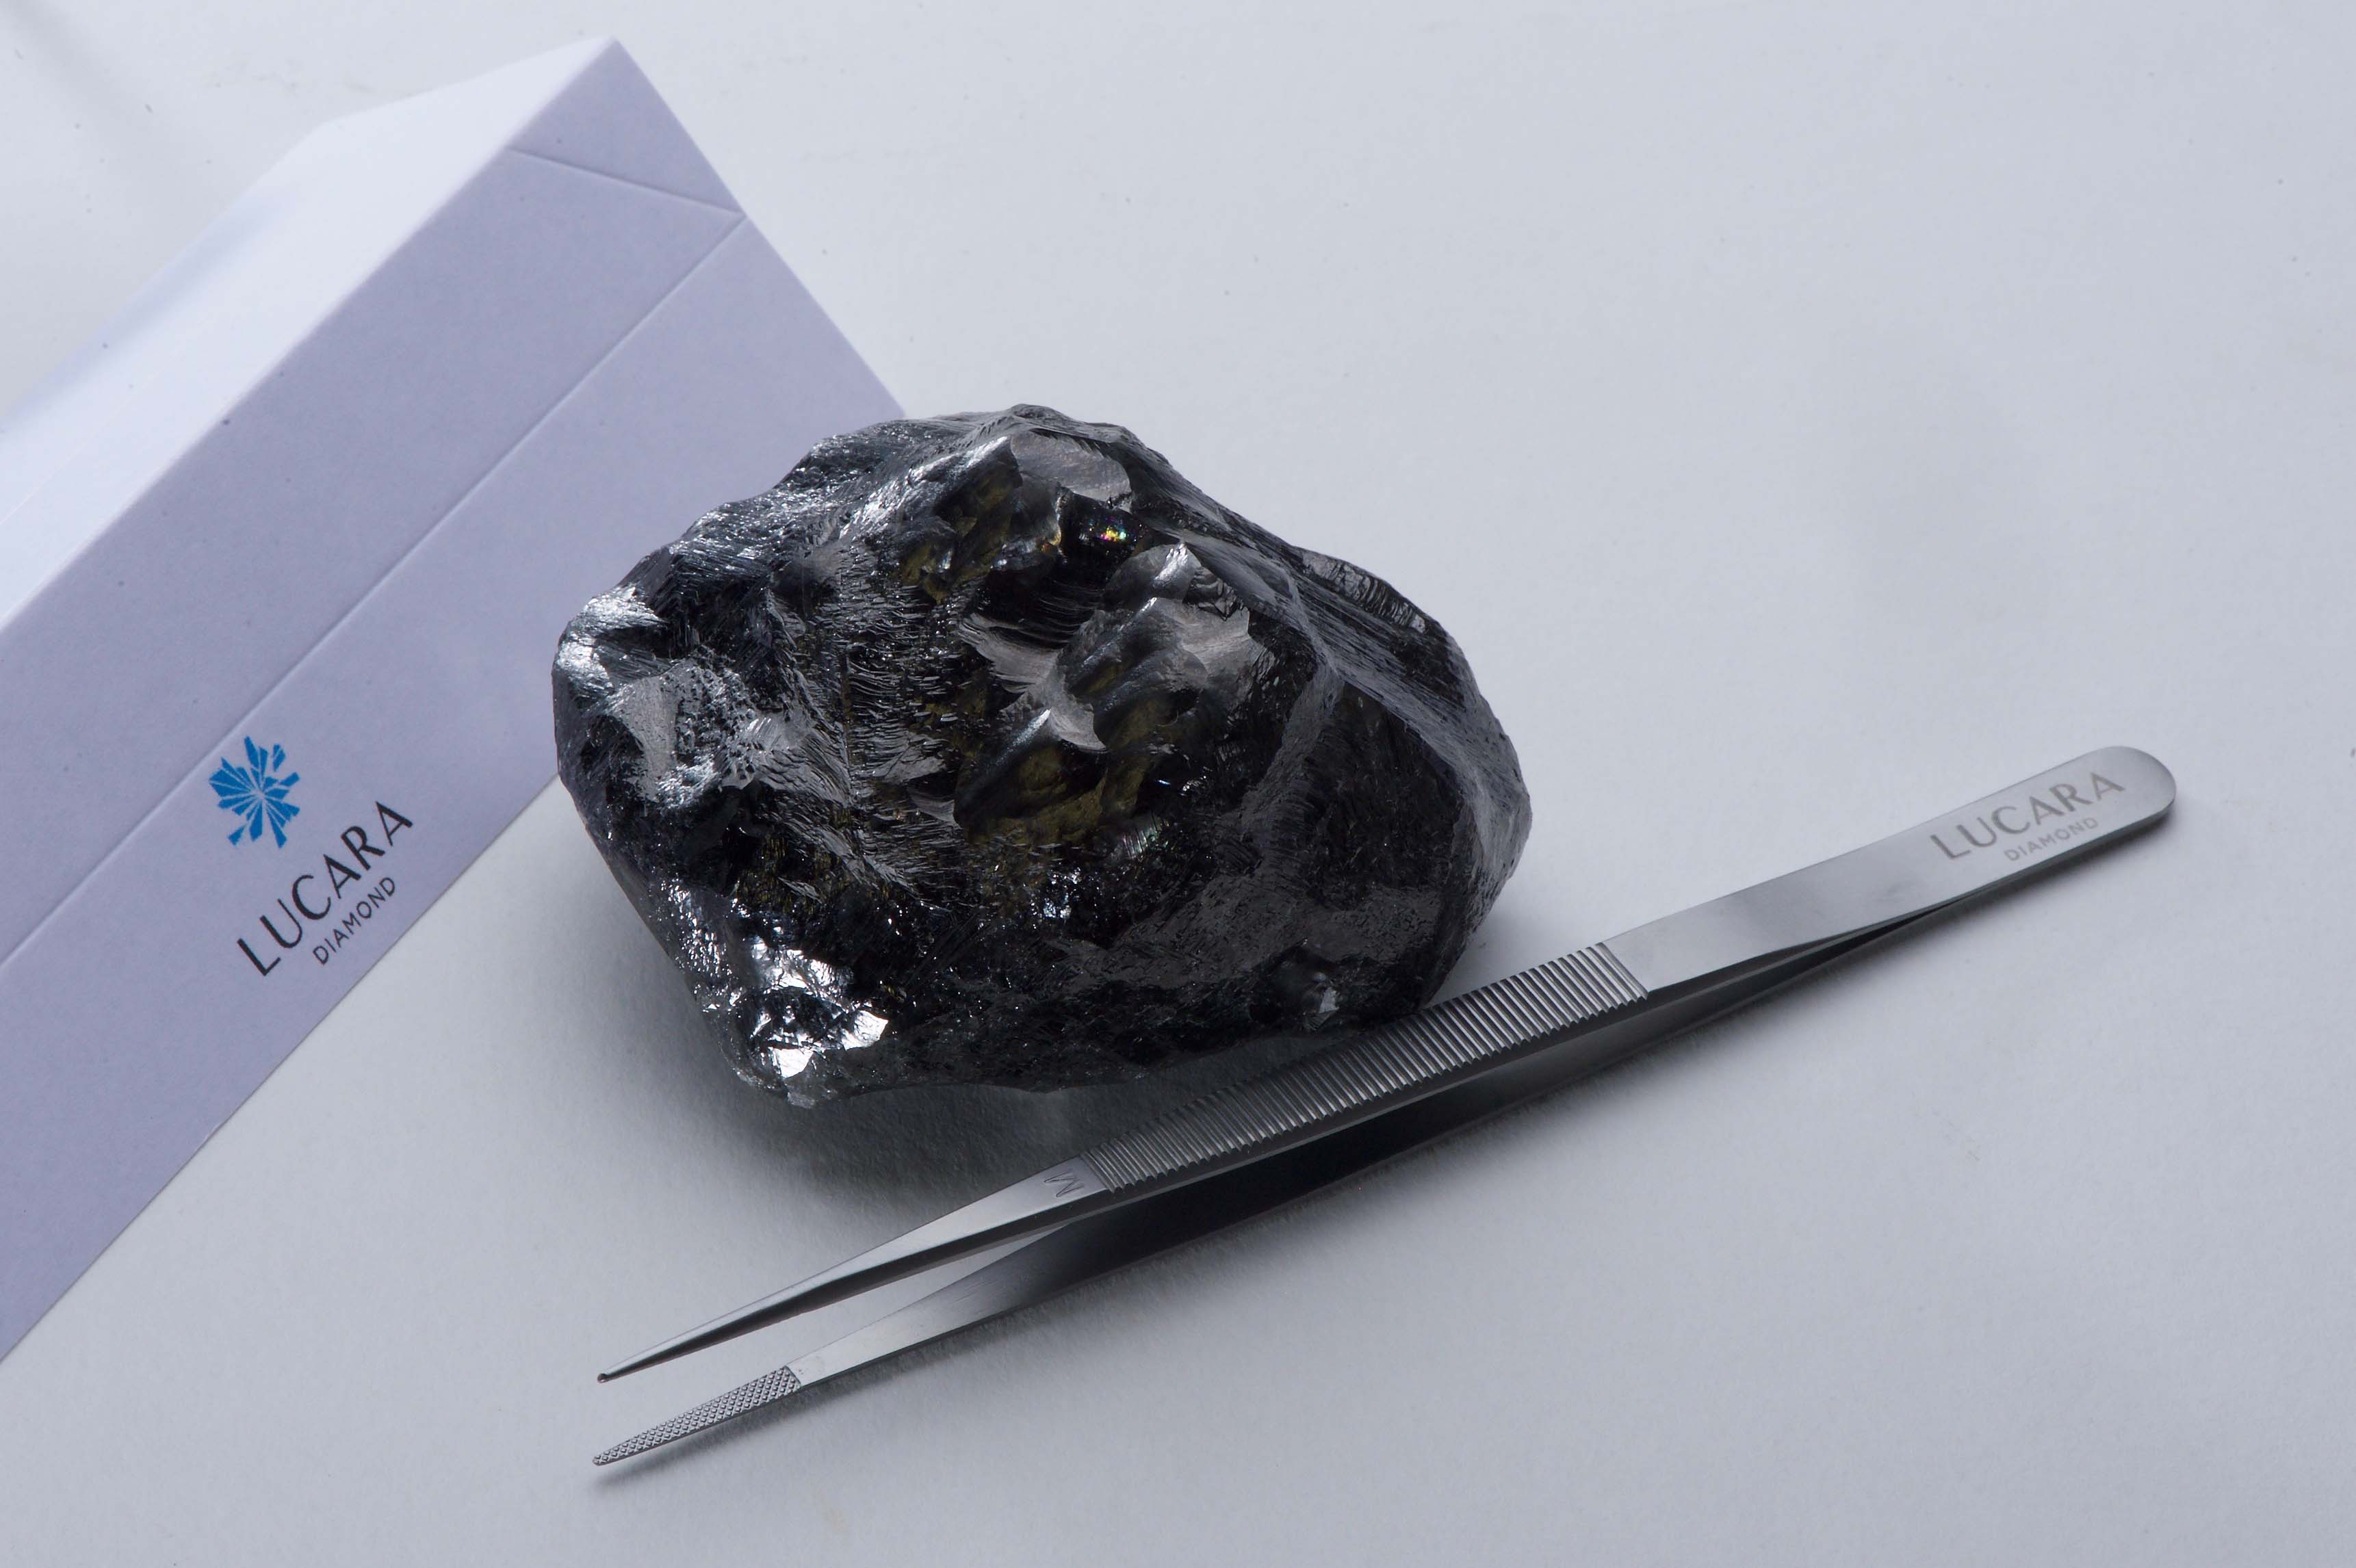 Louis Vuitton has discovered a 549-carat raw diamond